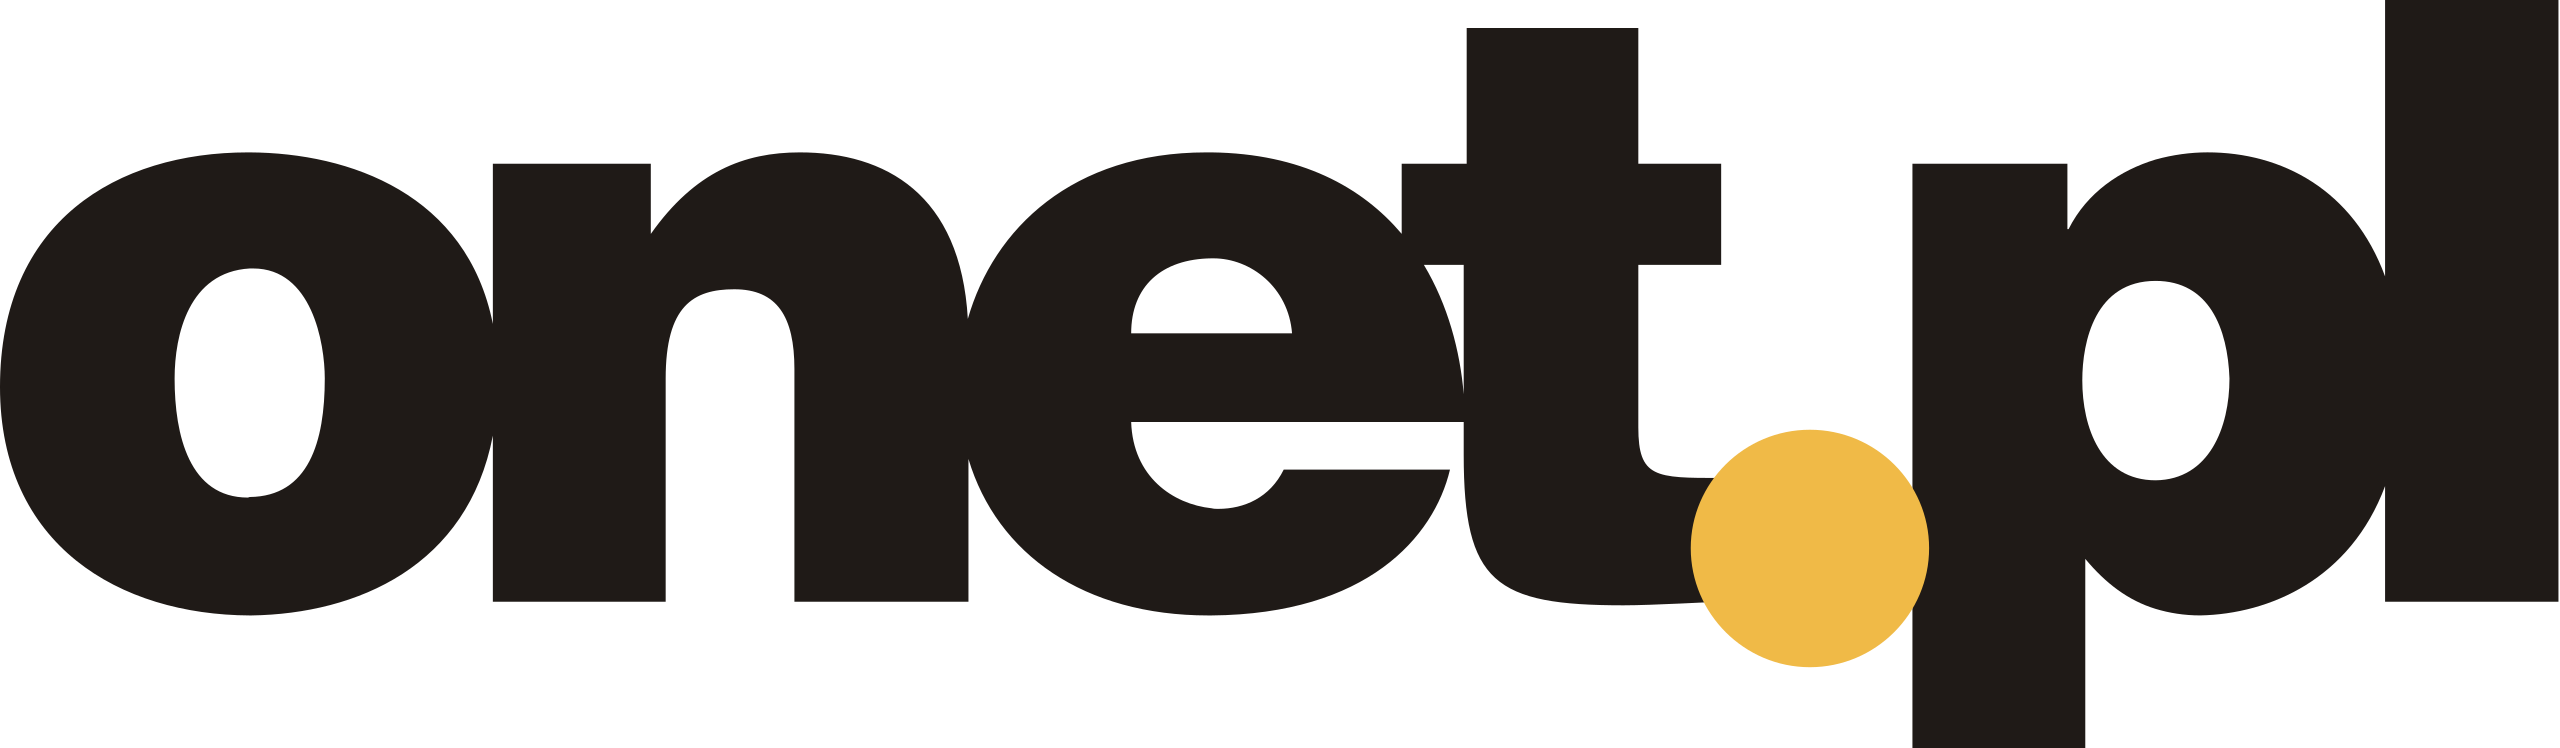 File:Onet.pl logo.svg - Wikimedia Commons